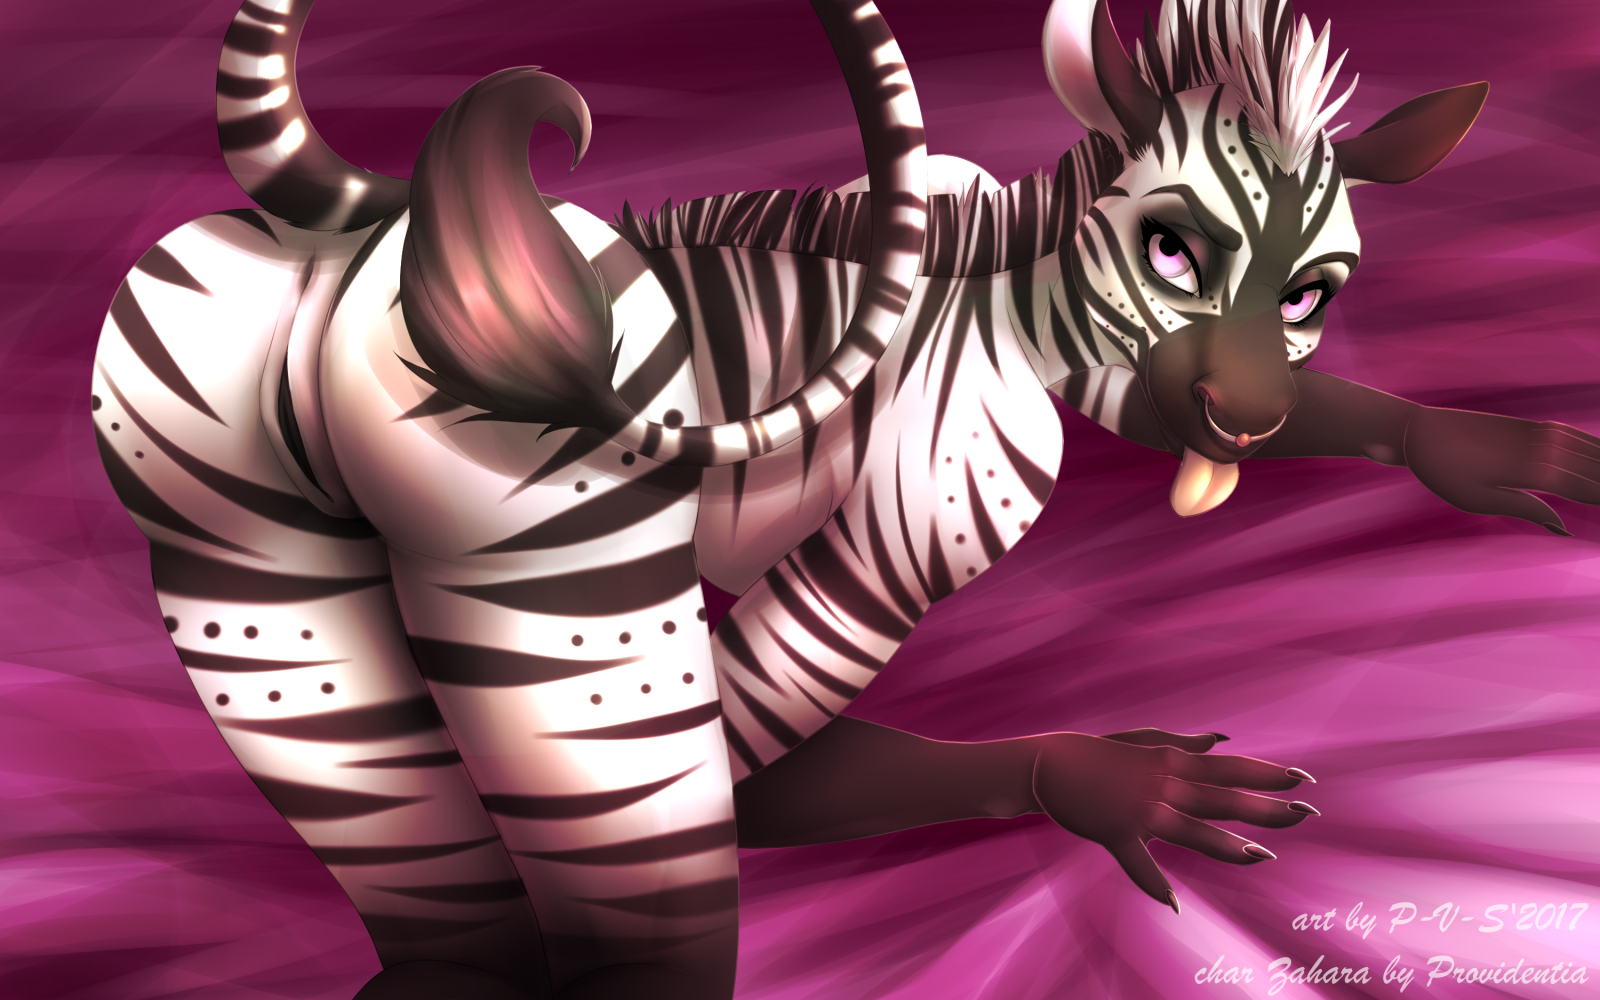 Zebra power: intense and erotic zebra pornography